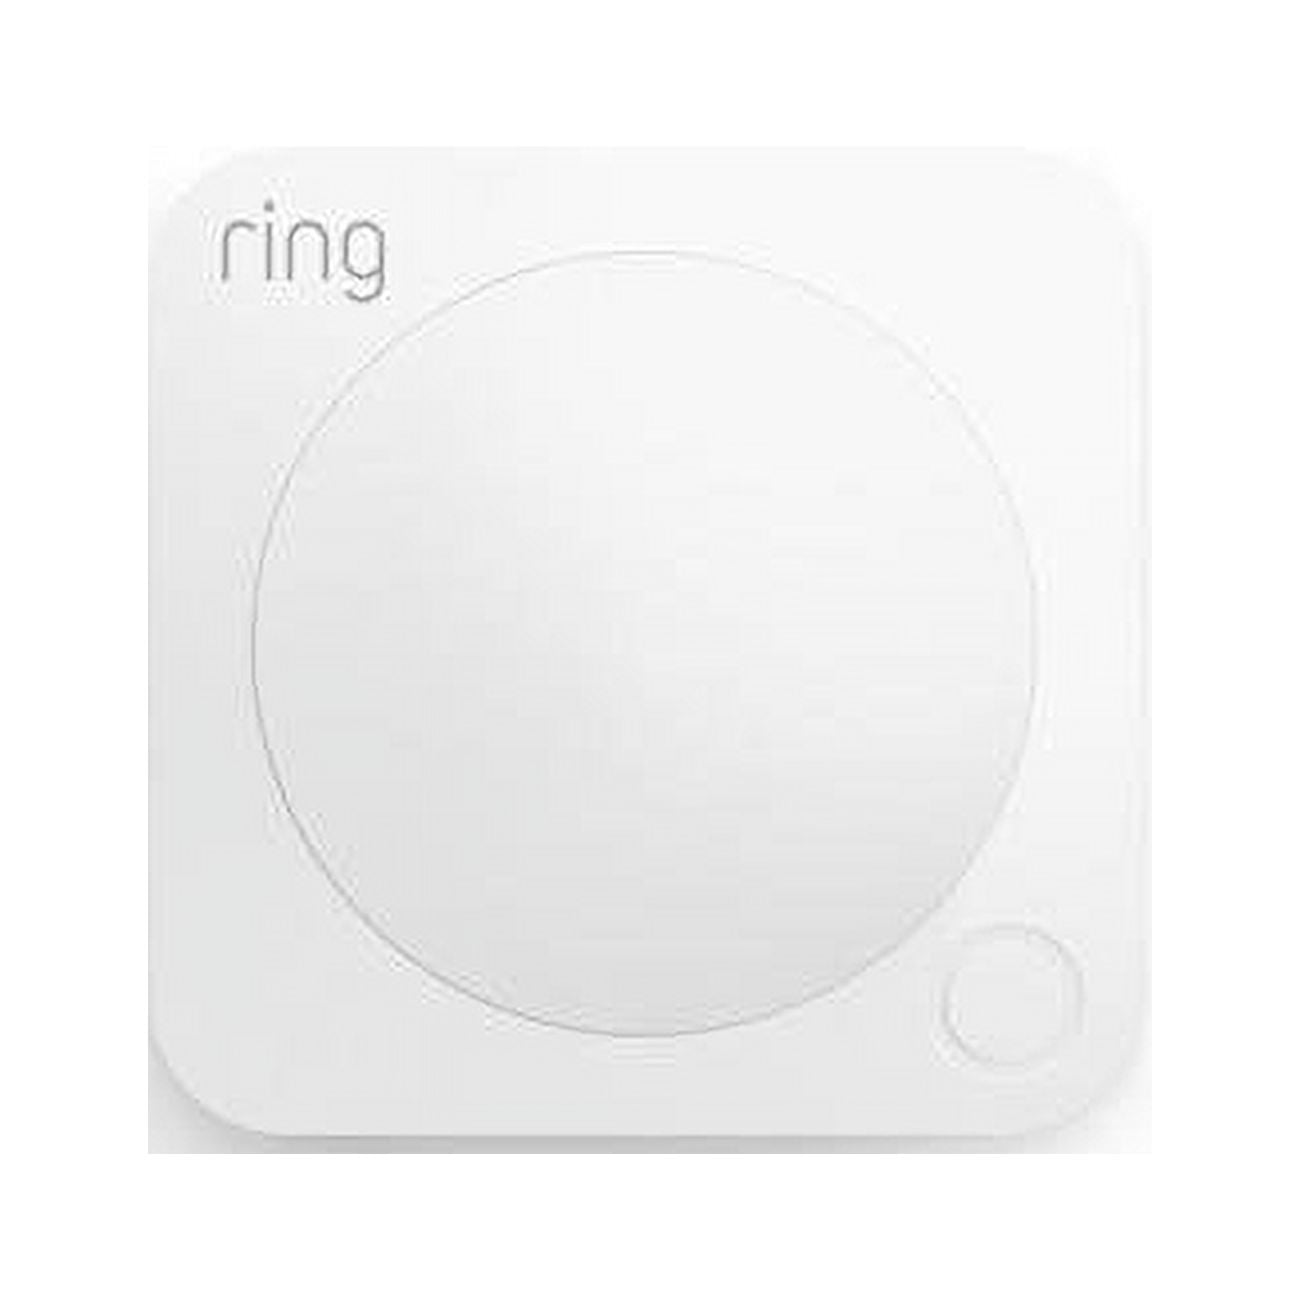 Ring Alarm Contact Sensor 2-pack (2nd Gen)